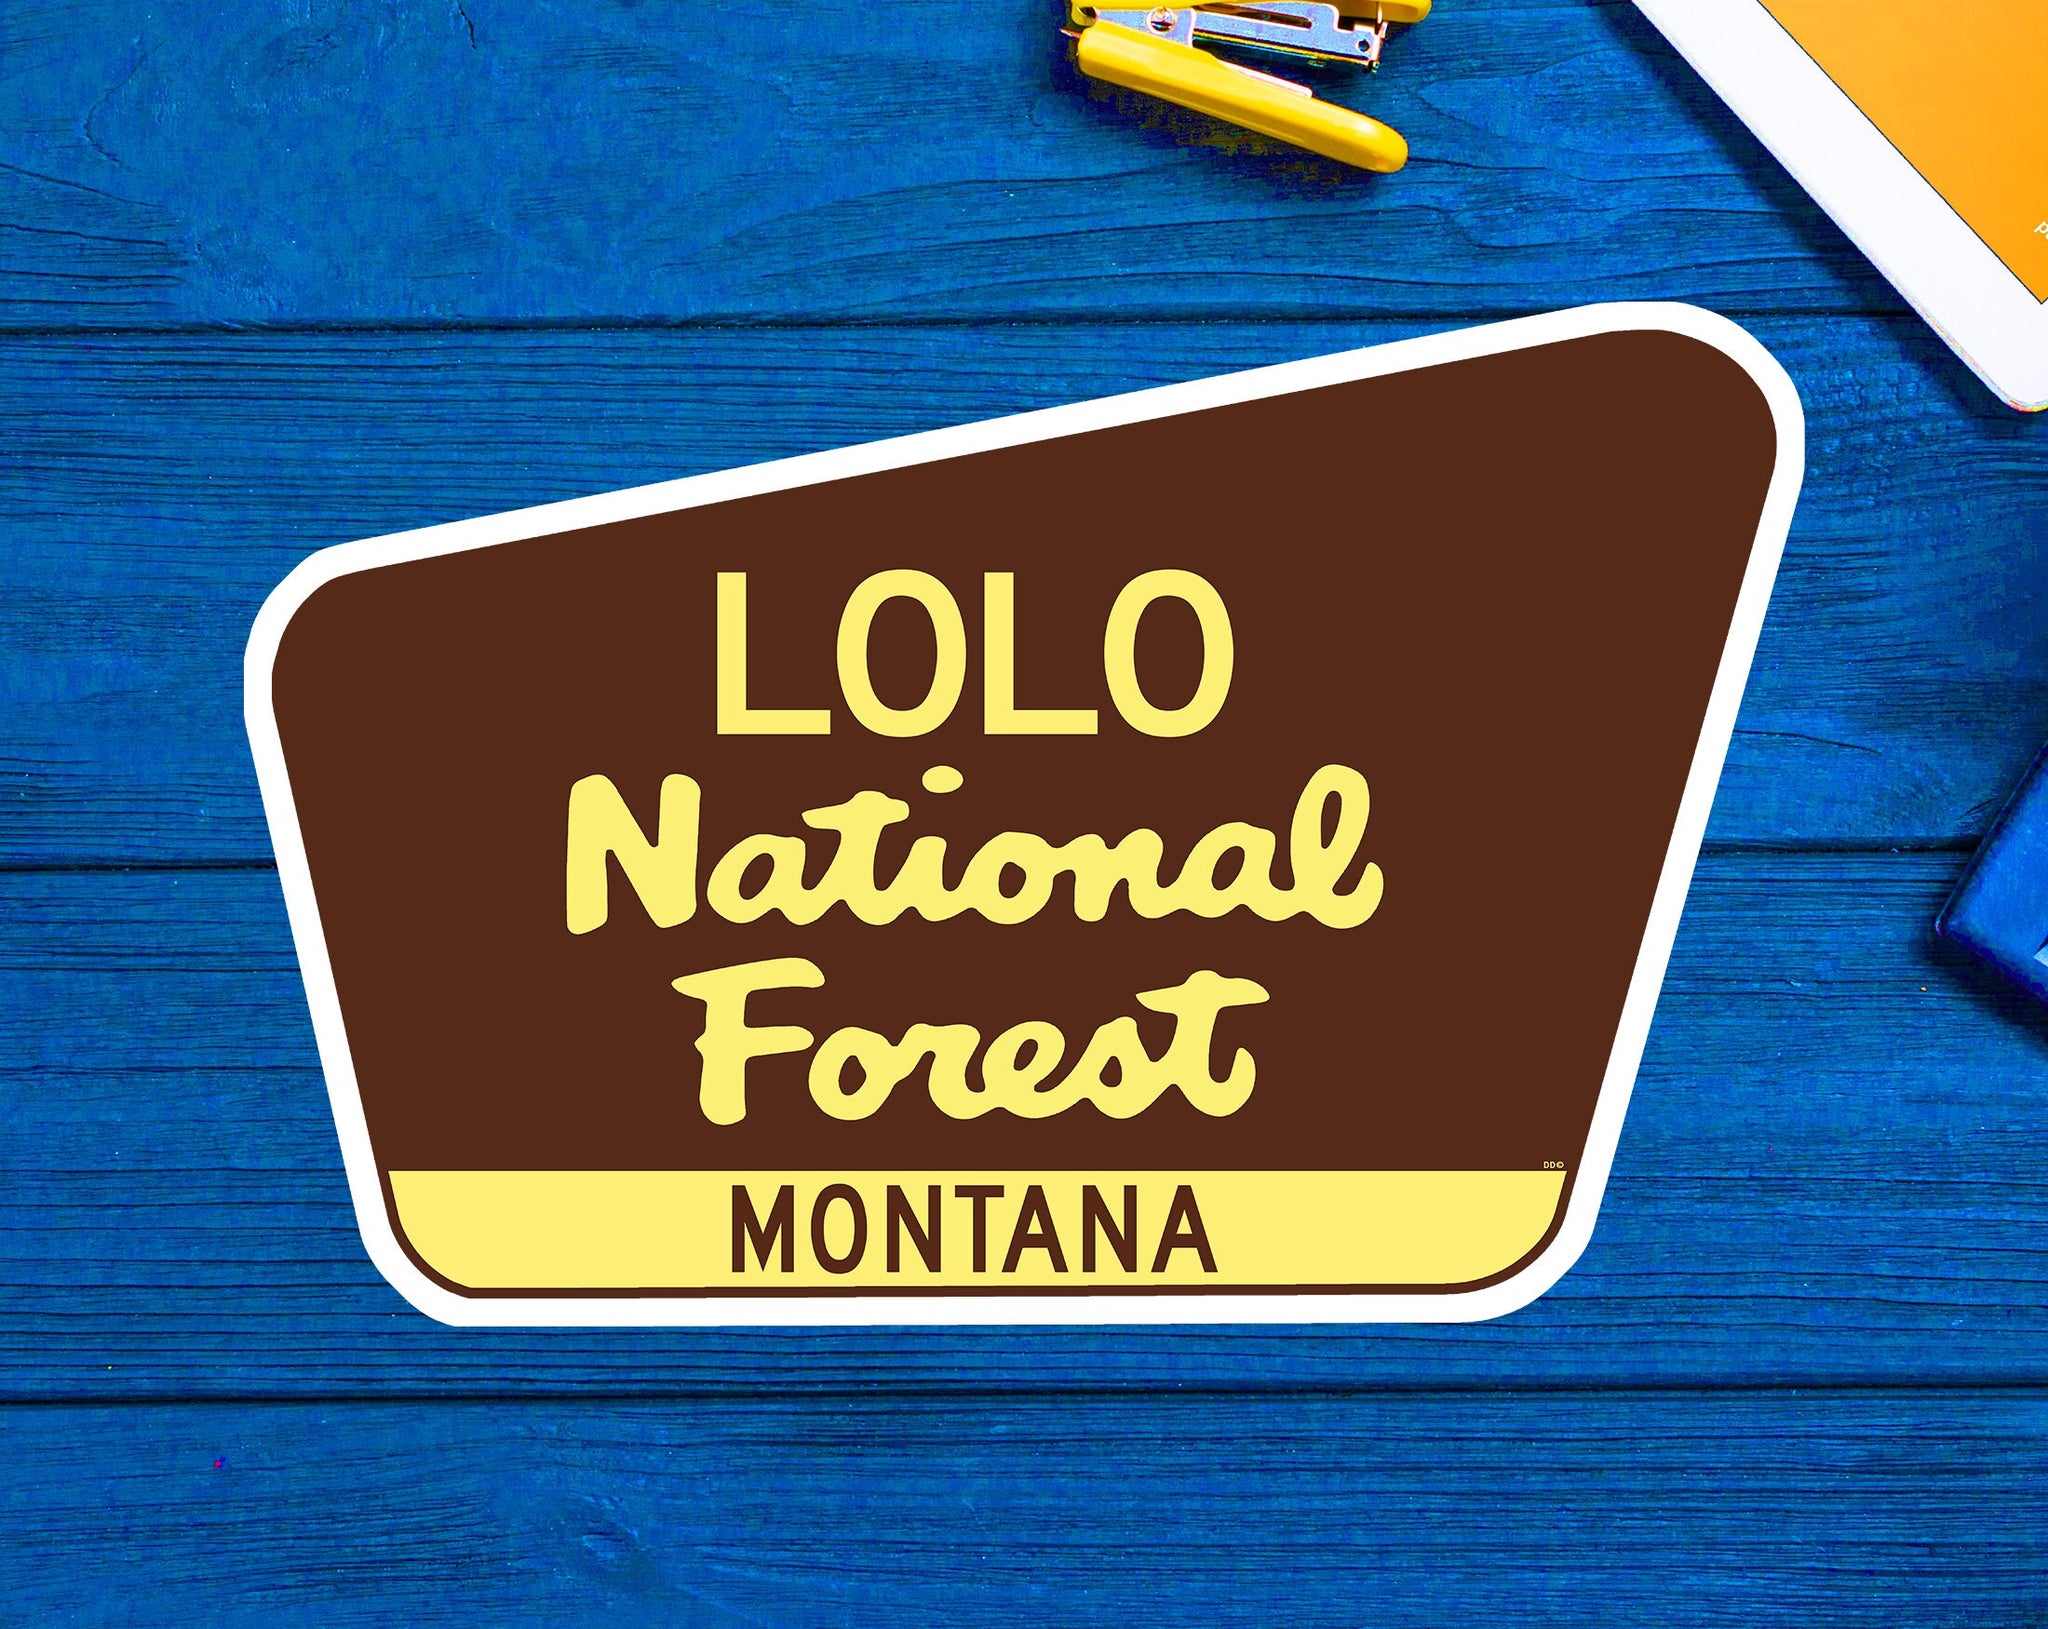 Lolo National Forest Decal Sticker 3.75" x 2.45" Montana Park Vinyl